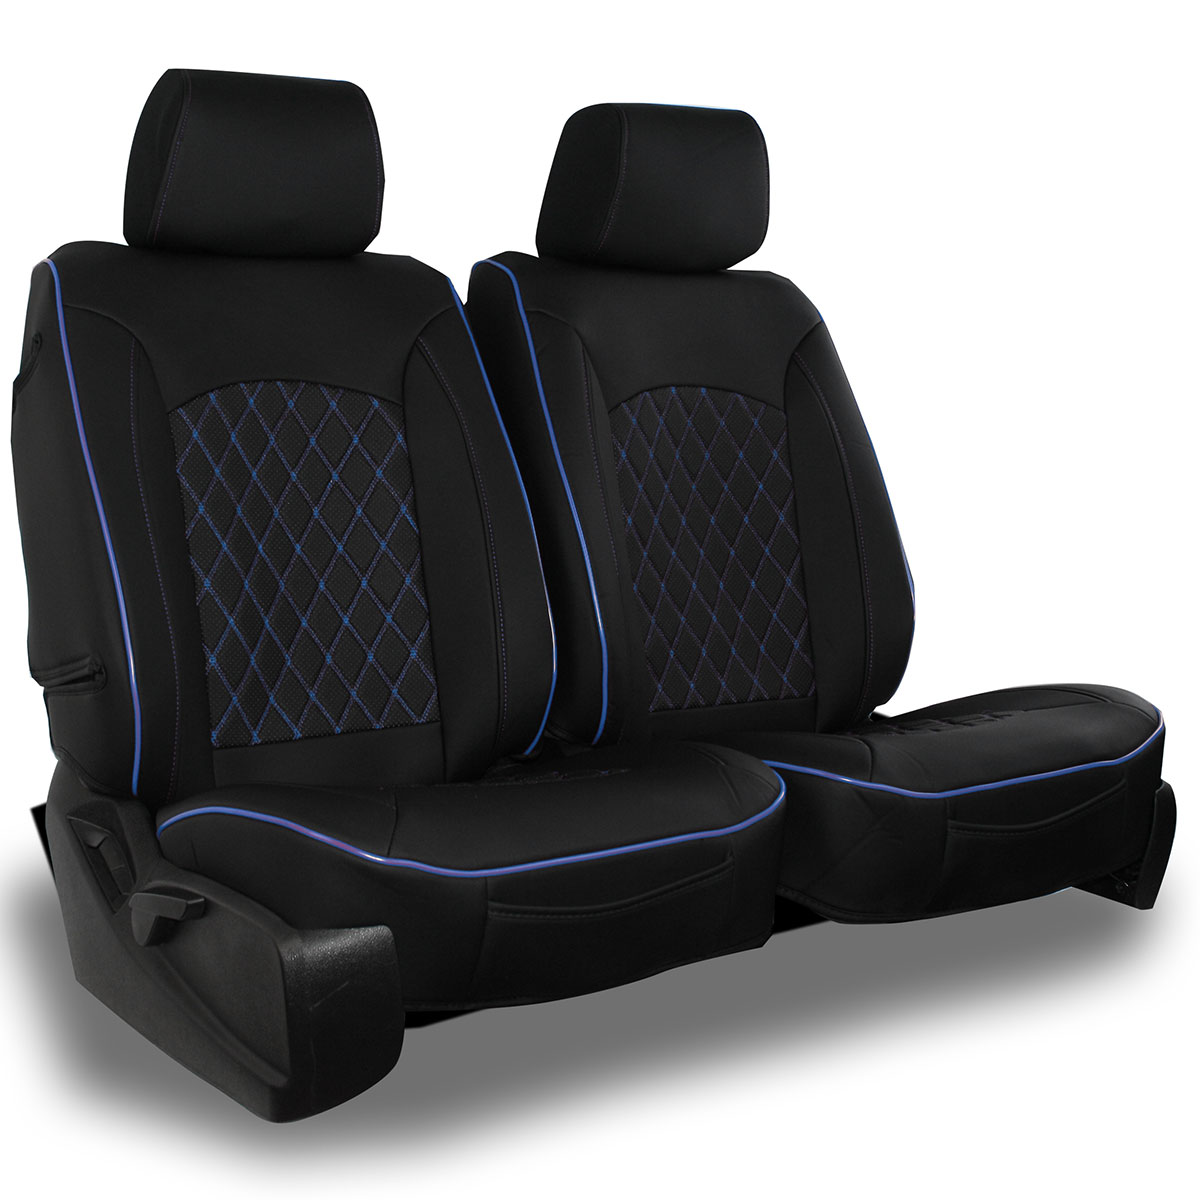 https://autohq.com/images/products/superlamb_semi-custom-leatherette-diamond-seat-cover_black-blue.jpg